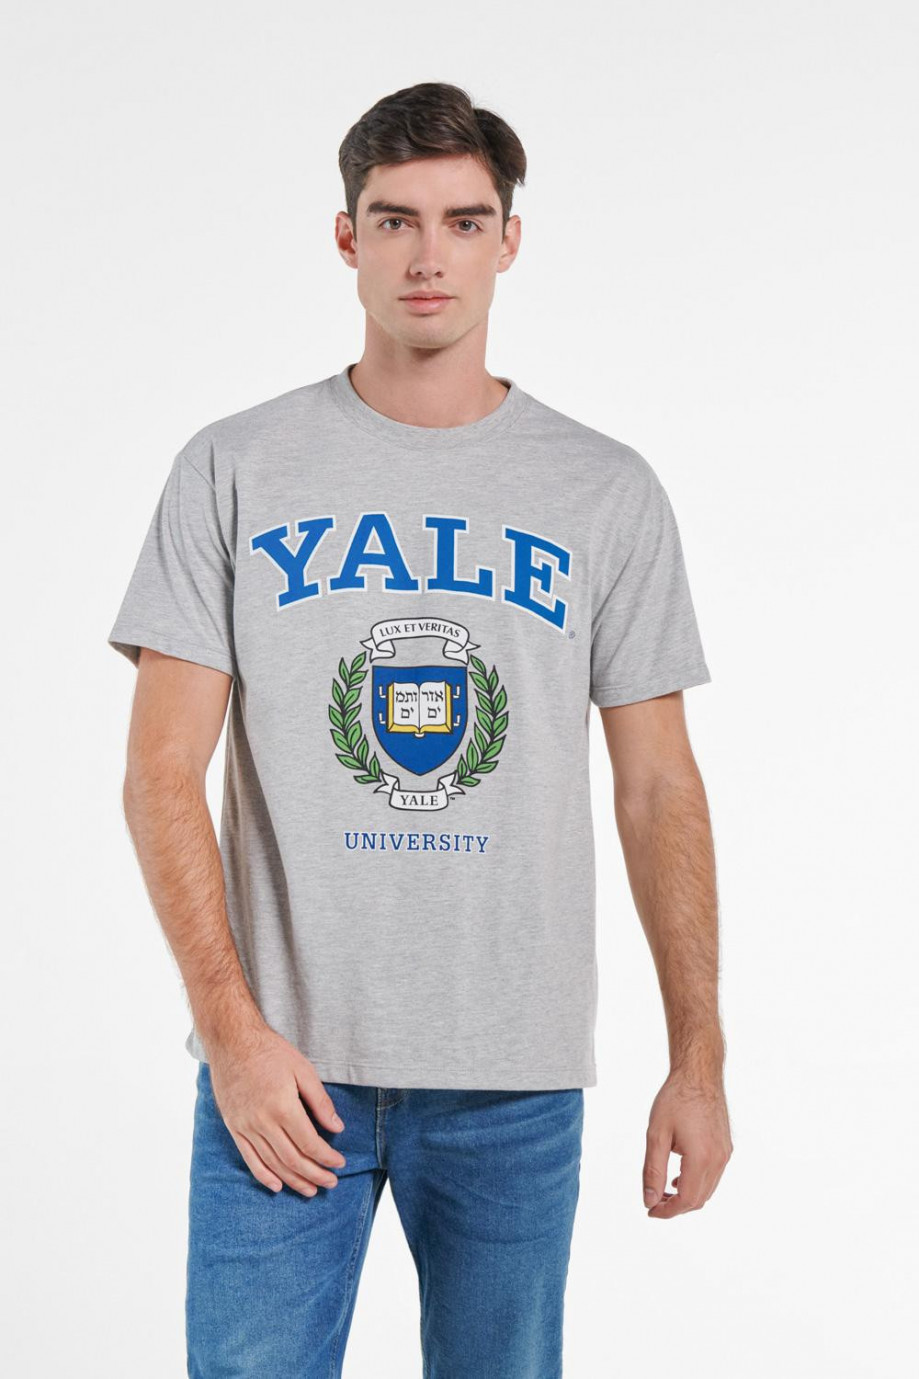 Camiseta manga ranglan corta, estampado de Yale University.